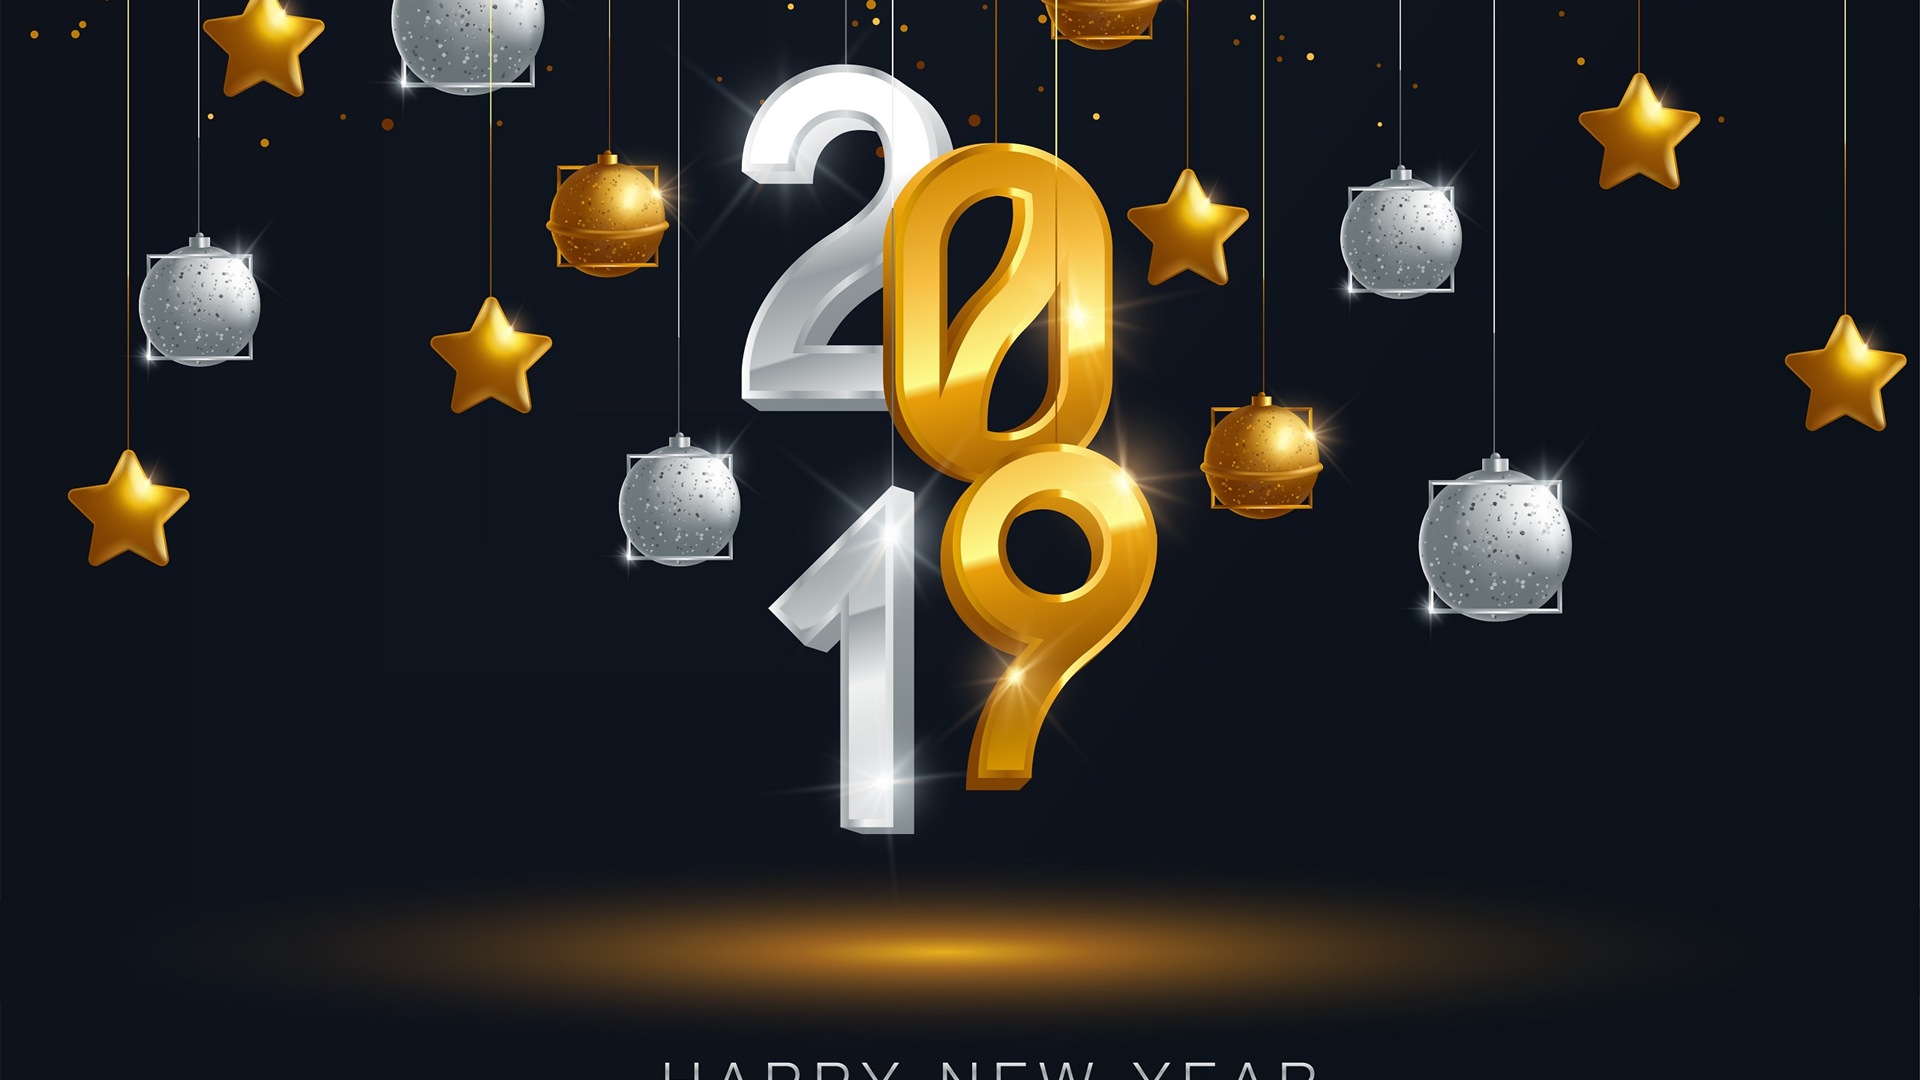 Frohes neues Jahr 2019 HD Wallpaper #12 - 1920x1080